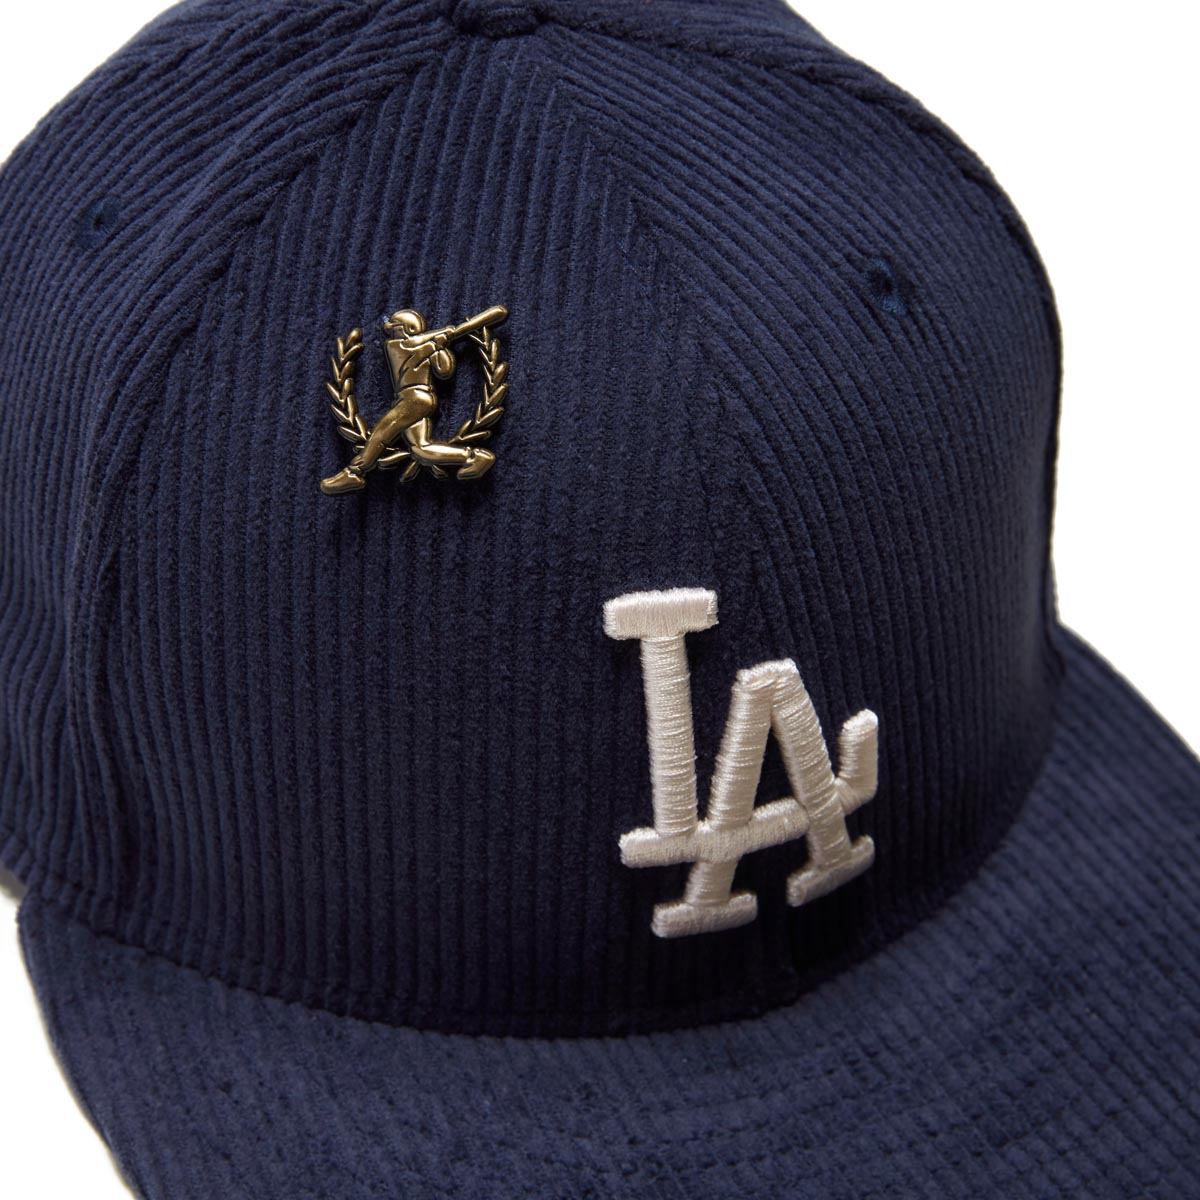 New Era 5950 Letterman Pin Hat - Los Angeles Dodgers image 3